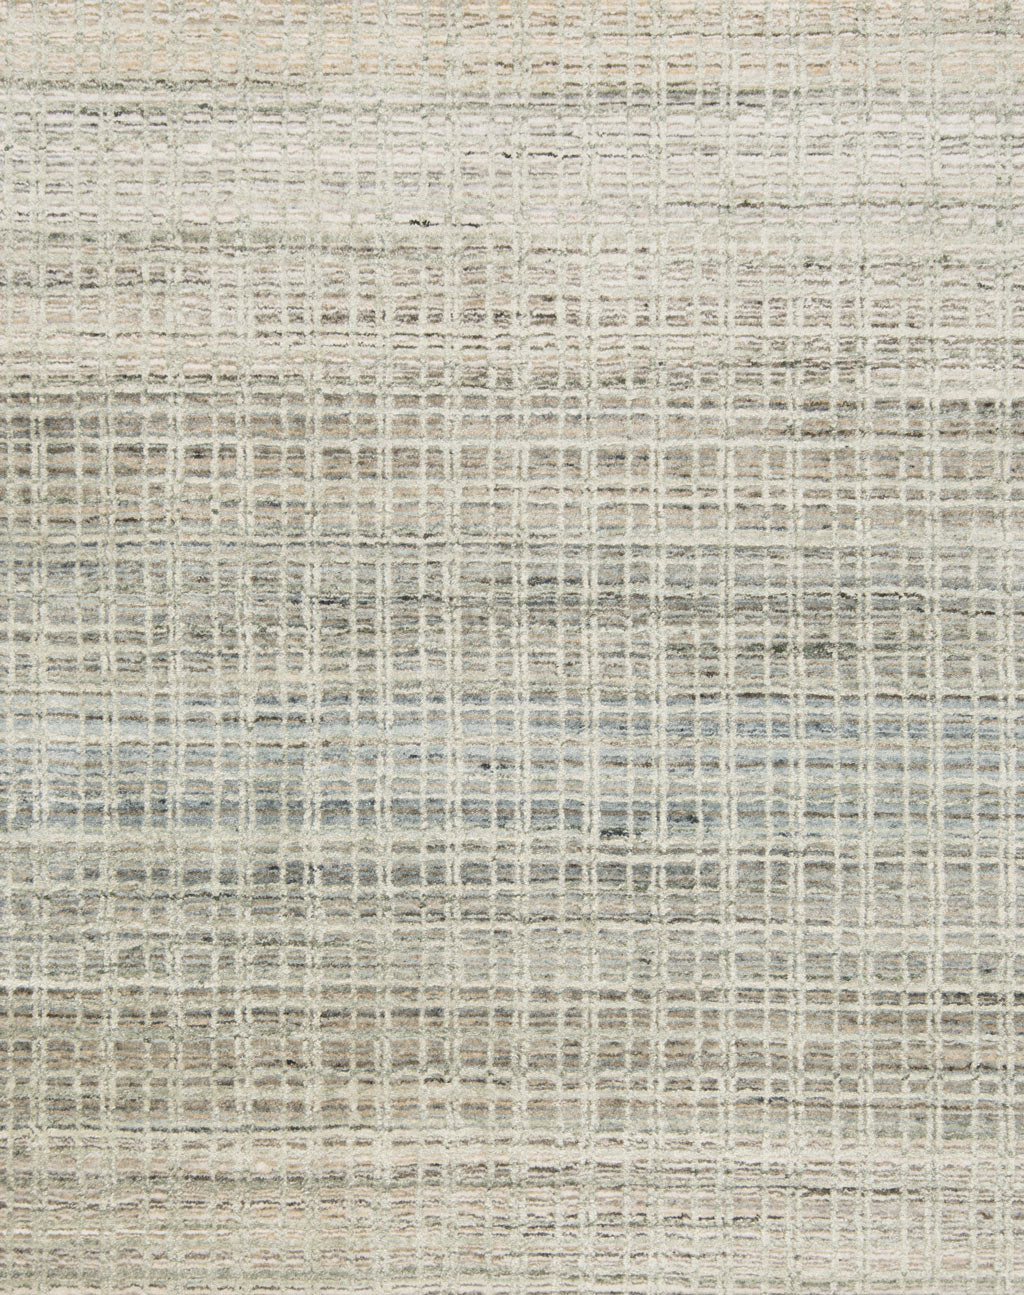 Handloom | 186 x 127 cm